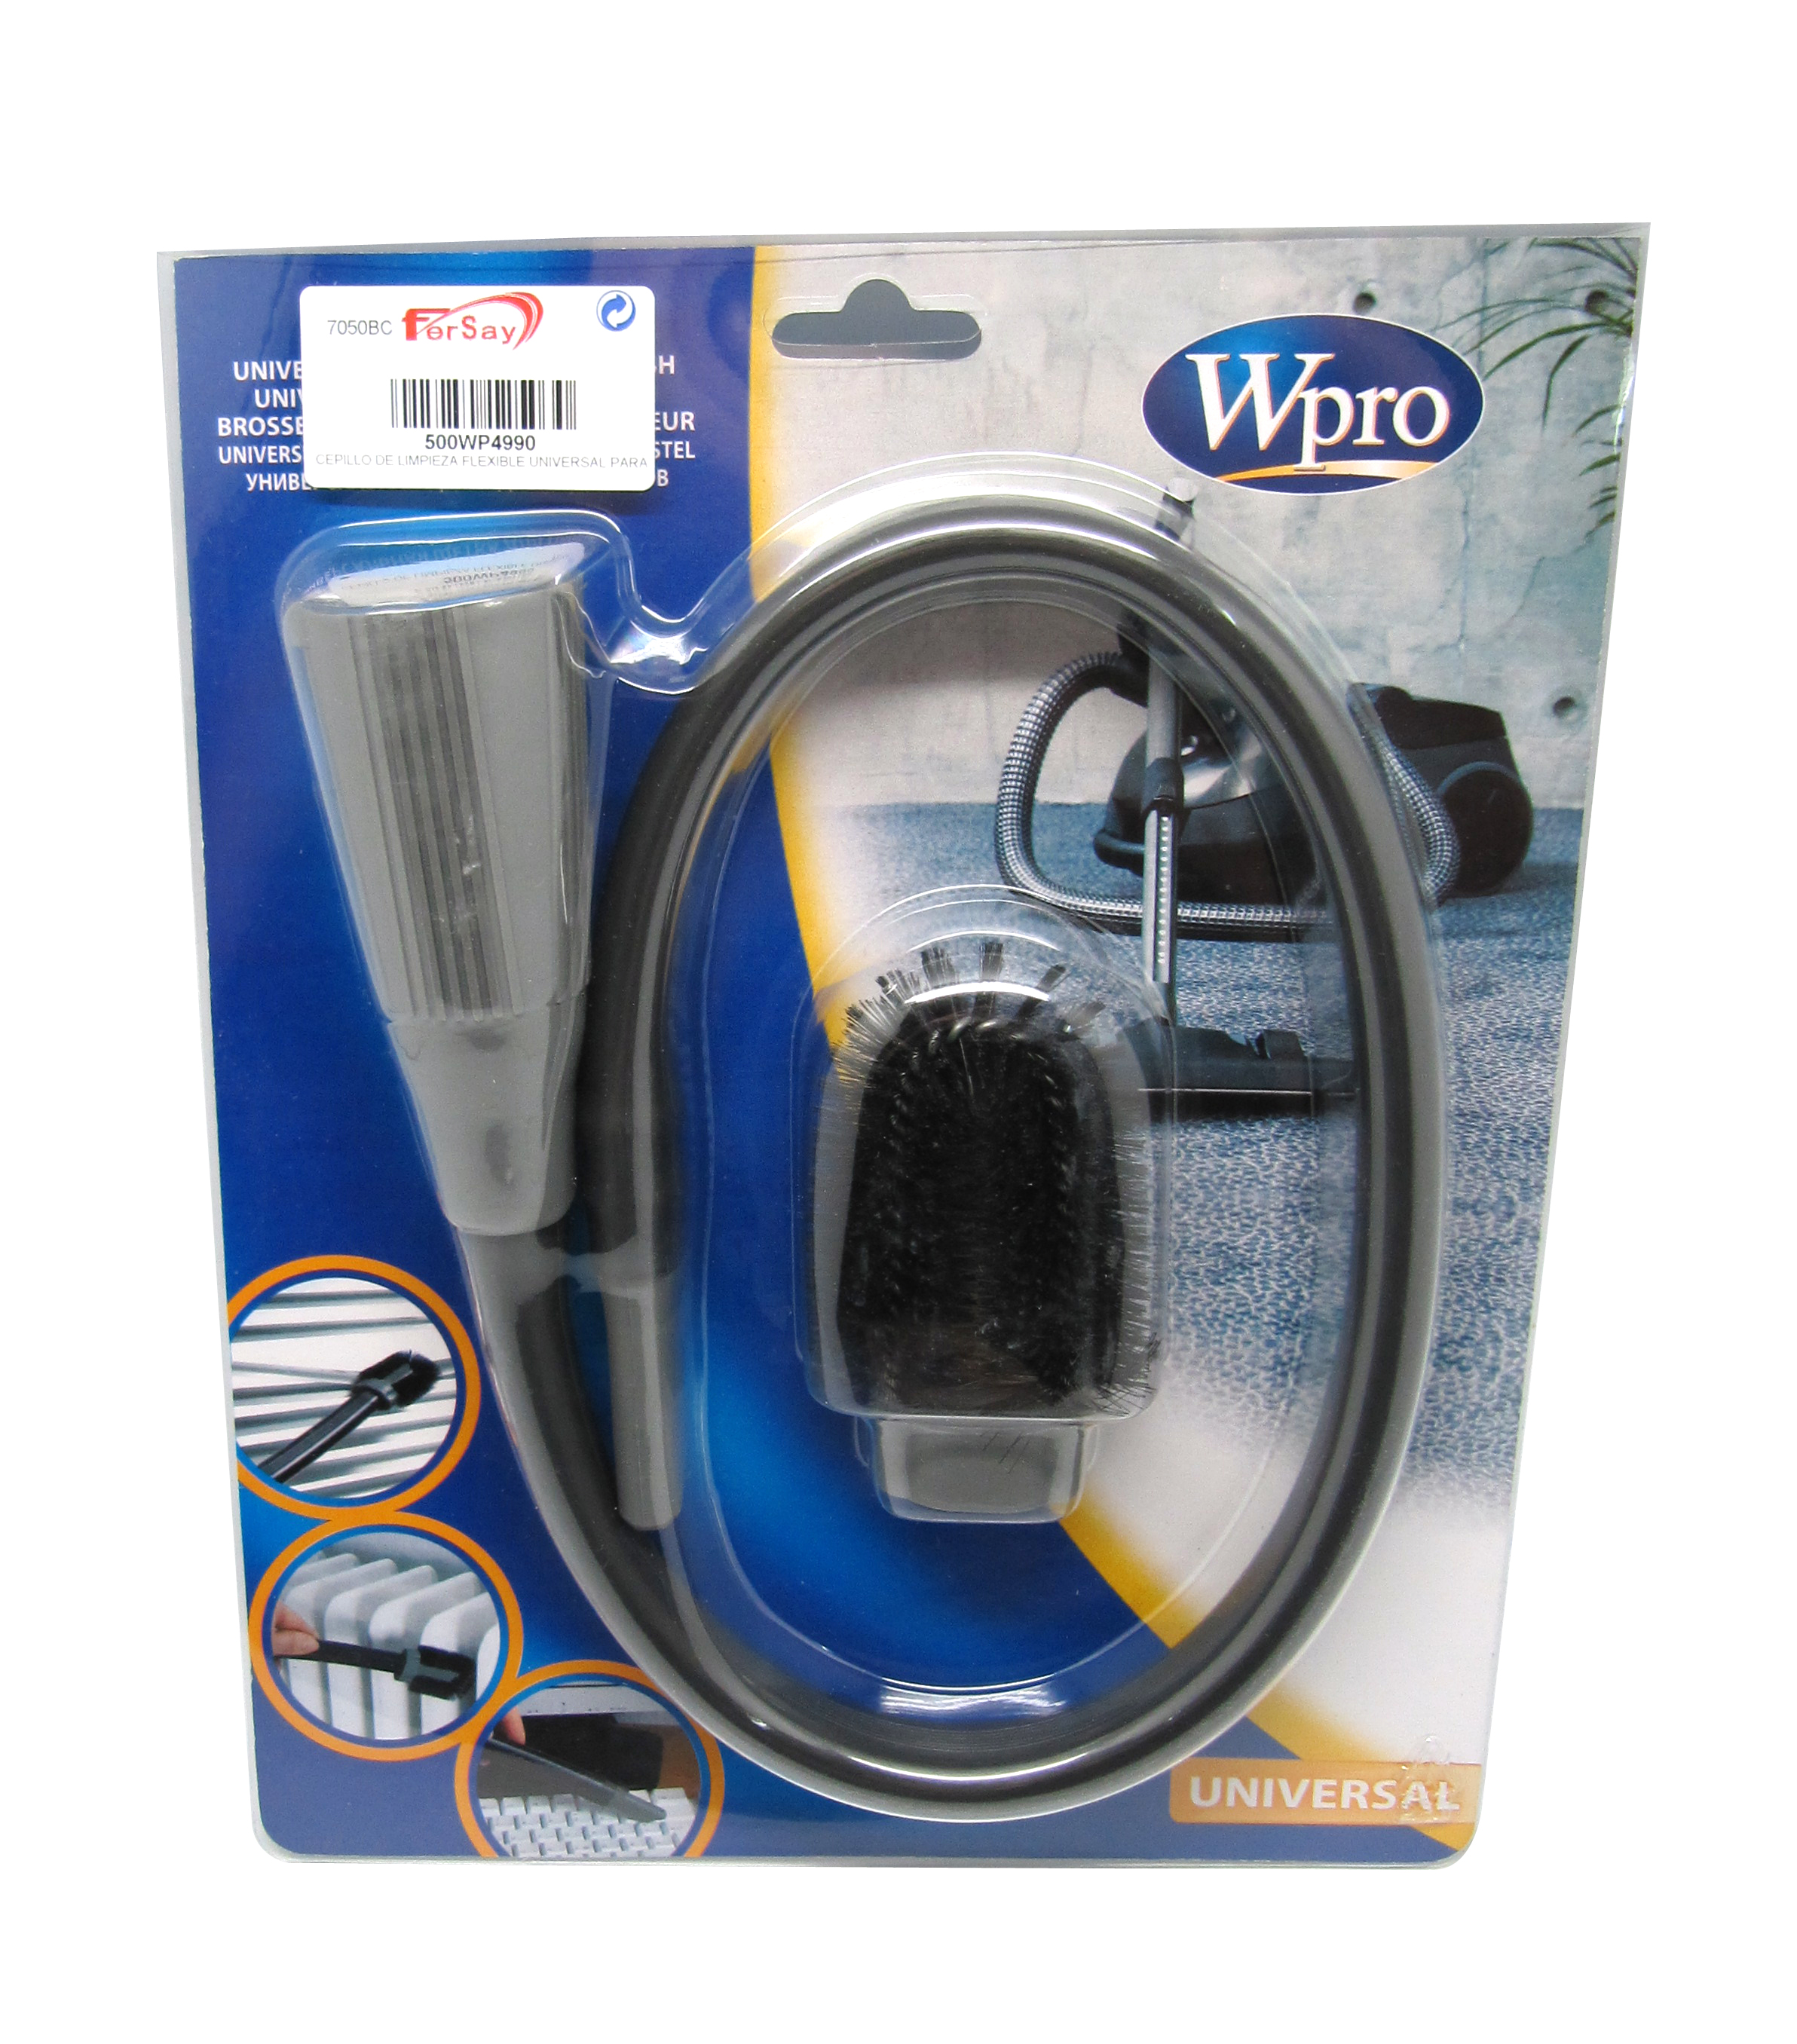 Cepillo limpiador para aspirador universal. - 500WP4990 - WHIRLPOOL